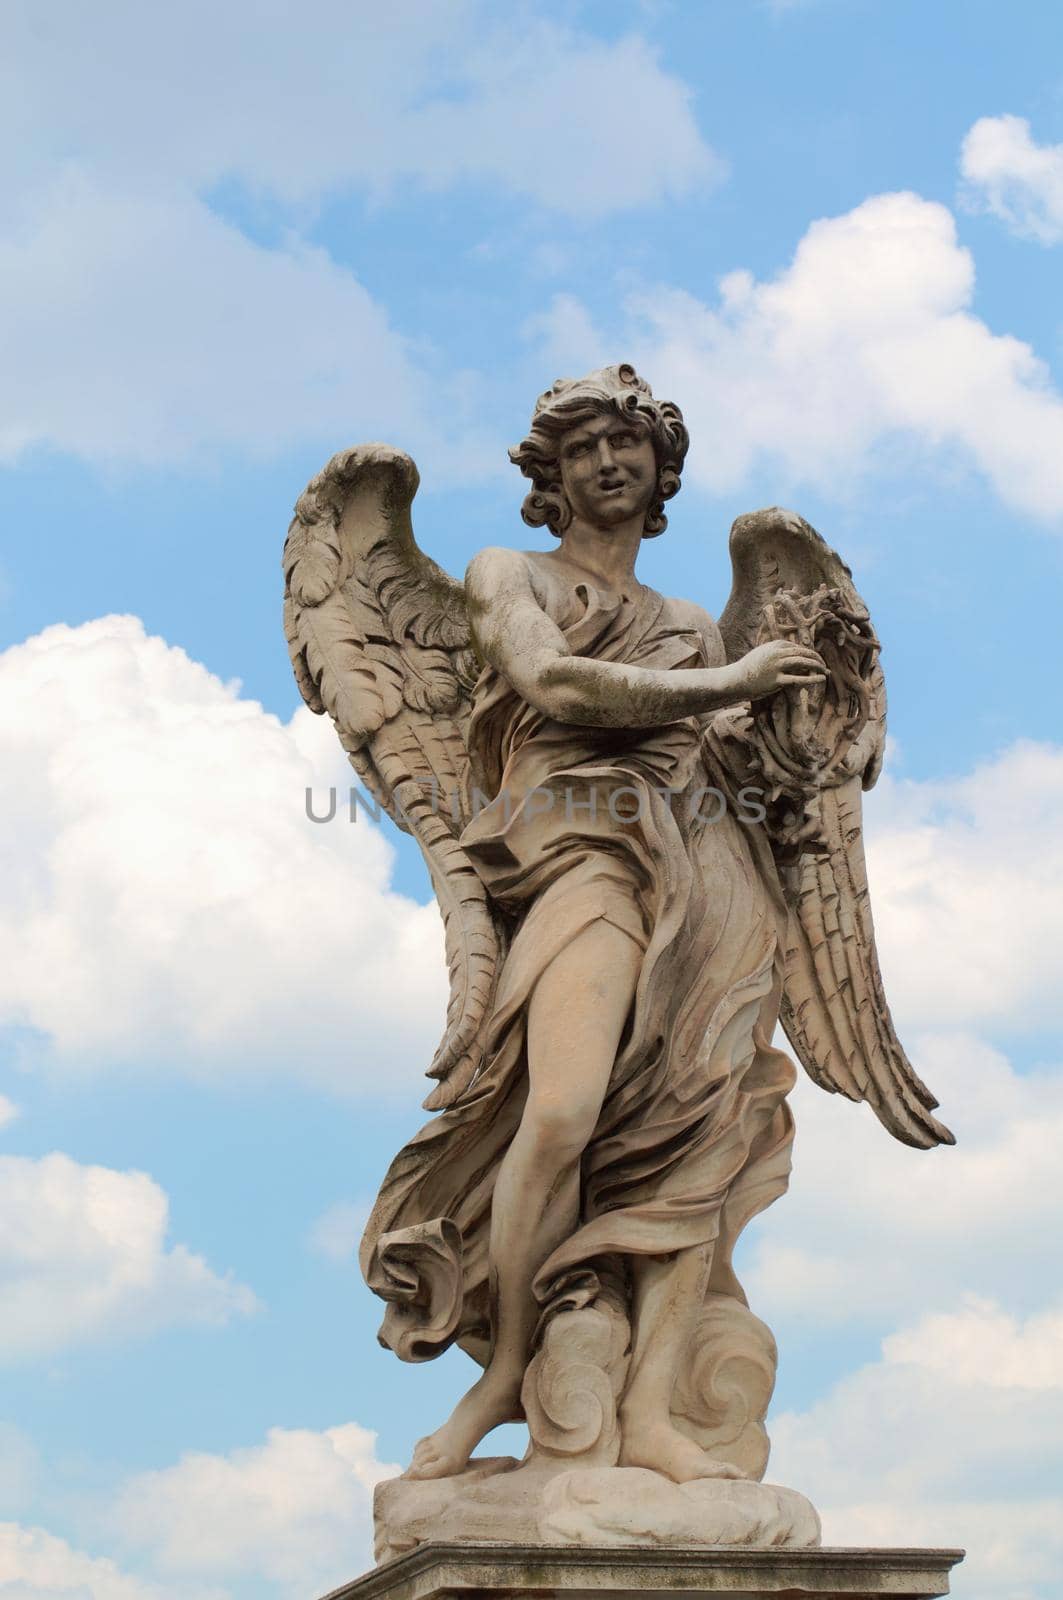 Statue of an angel against blue sky. by hernan_hyper